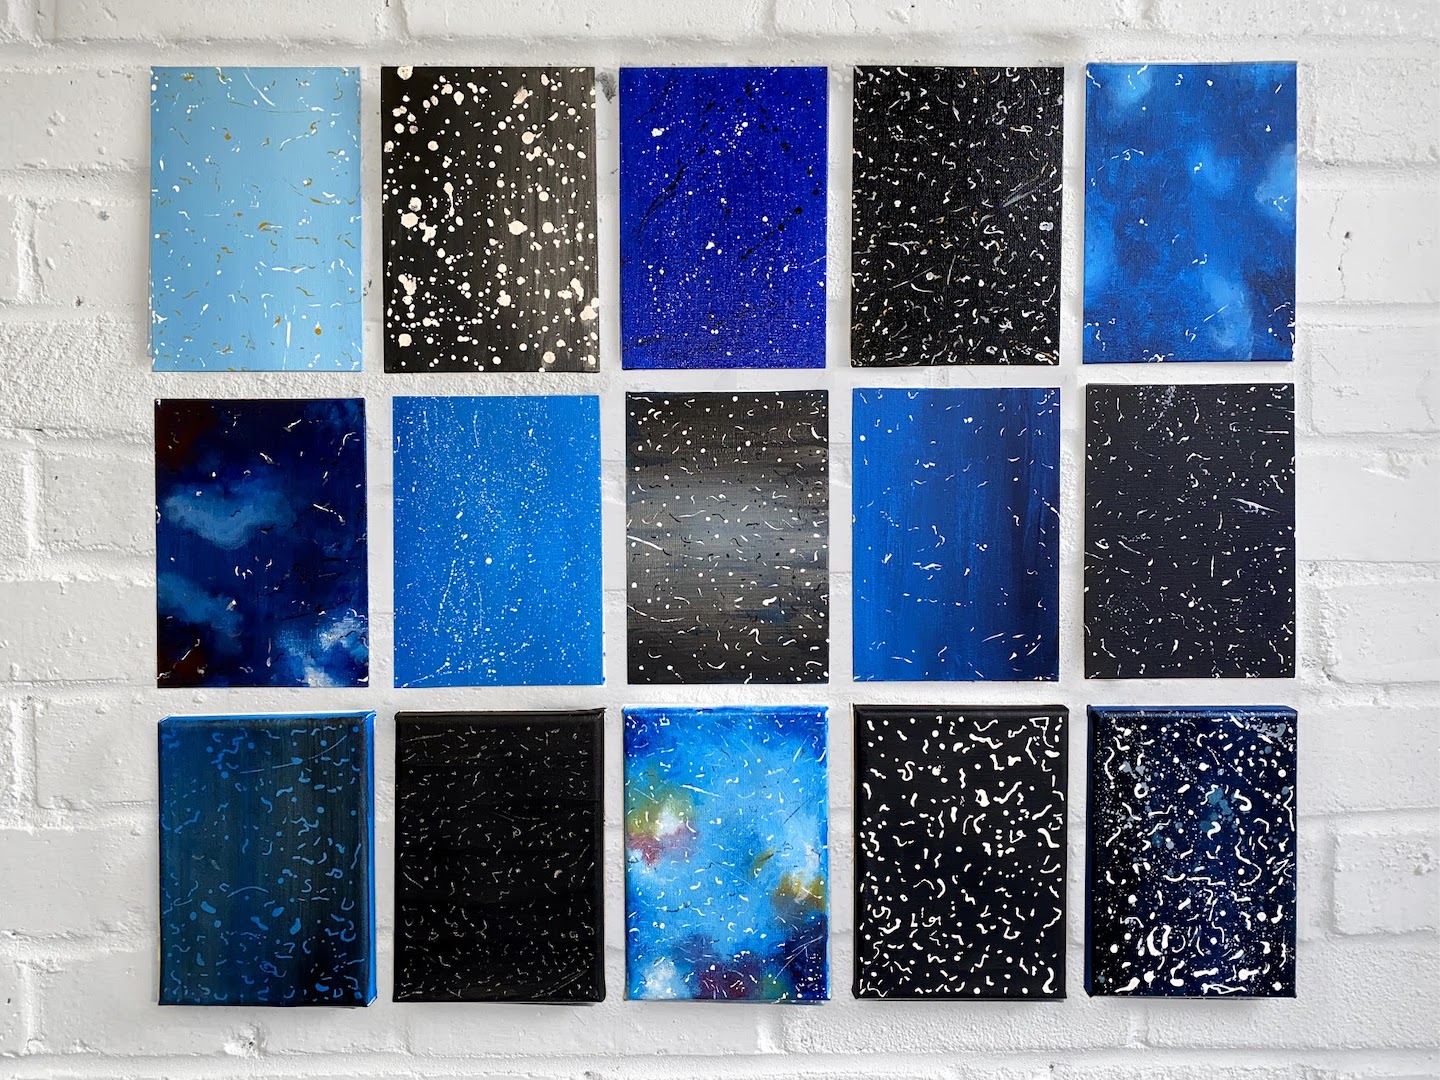 Dusty Screen Studies. 2020-2021. Acrylic on canvas. 25.4 x 20.32 cm (each)